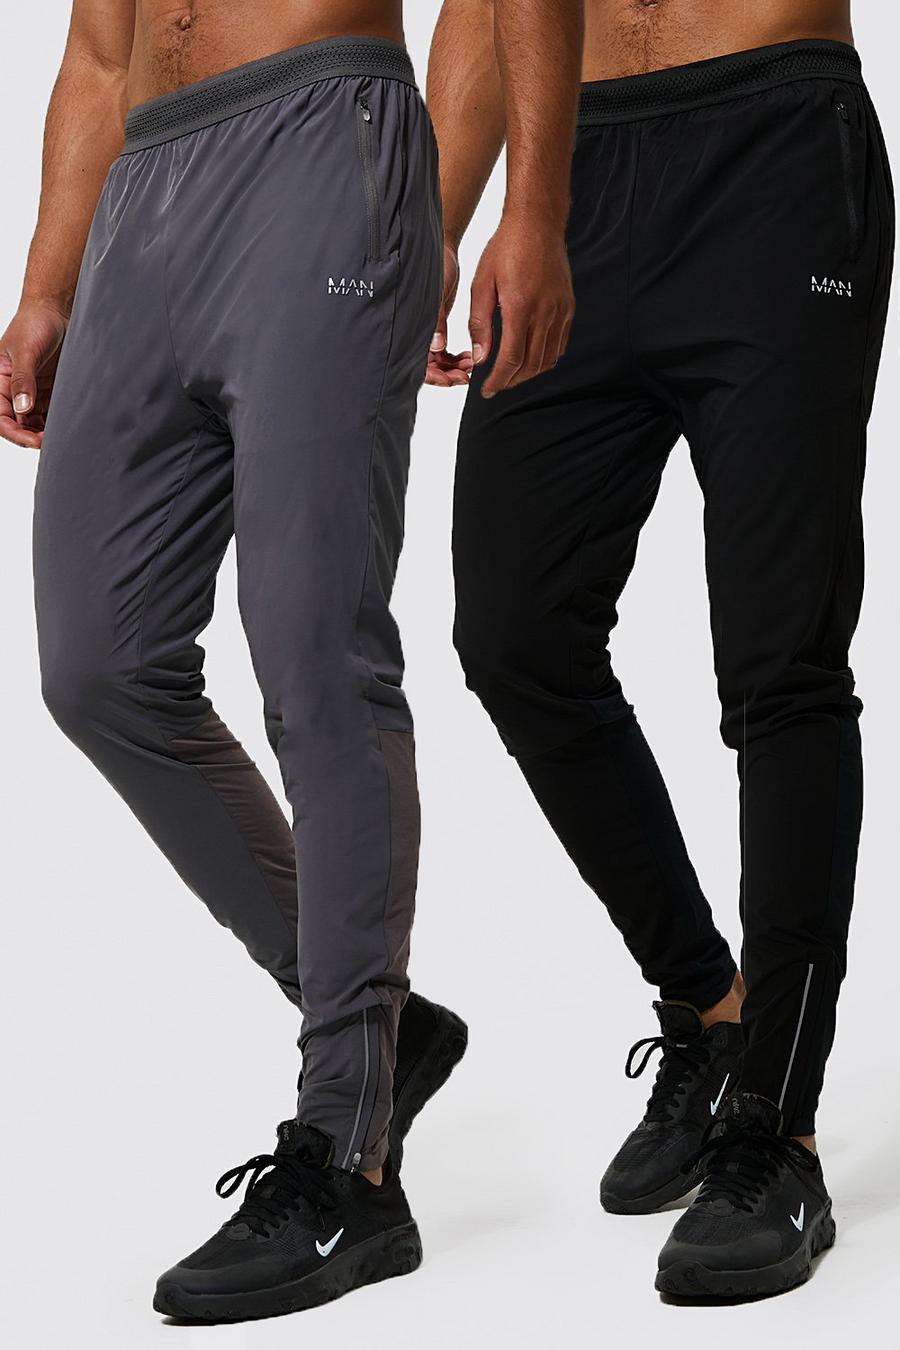 Pack de 2 pantalones de chándal Tall MAN Active deportivos ligeros, Black nero image number 1